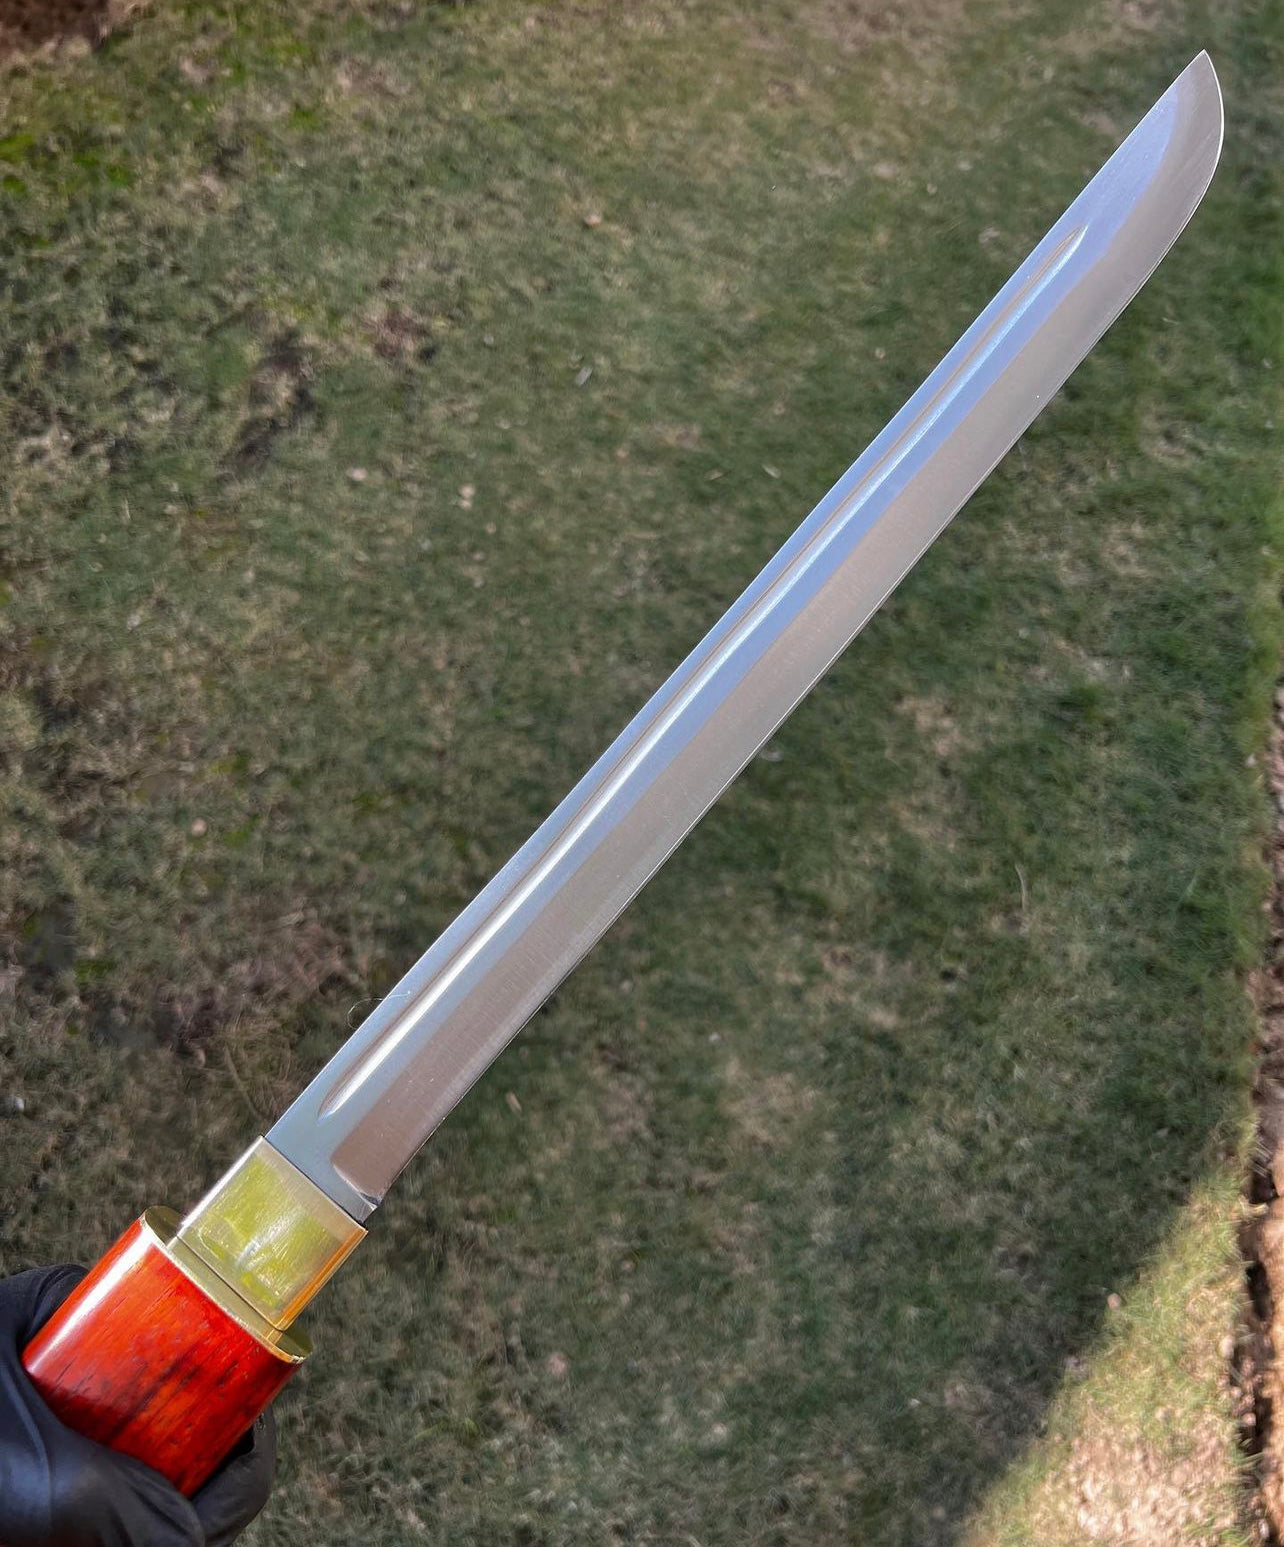 Samurai katana Sword